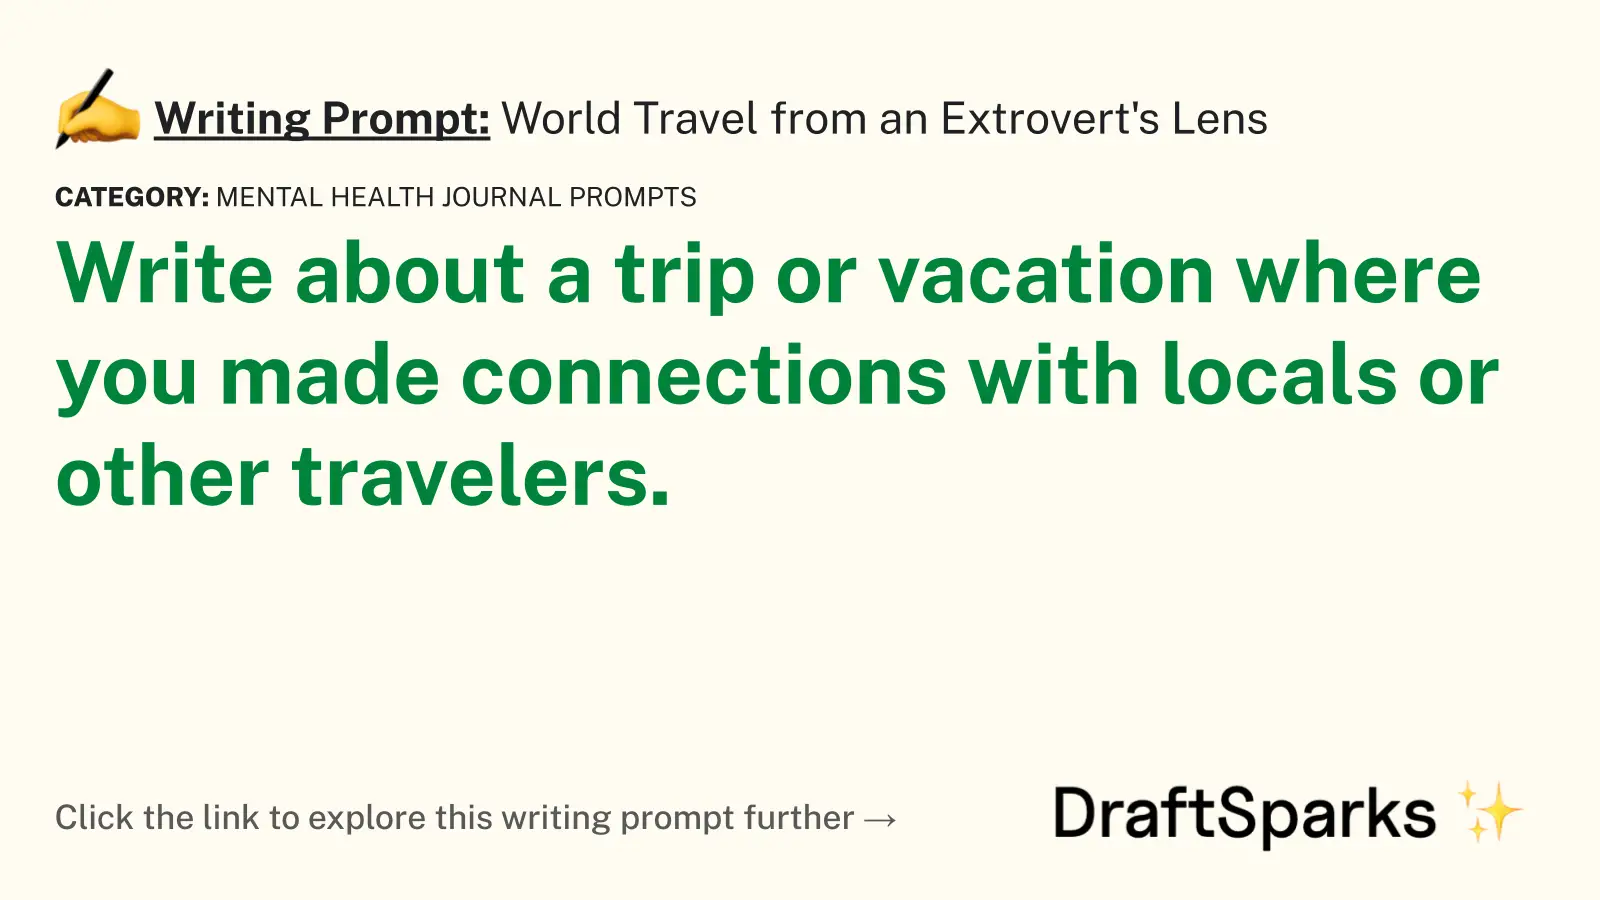 World Travel from an Extrovert’s Lens